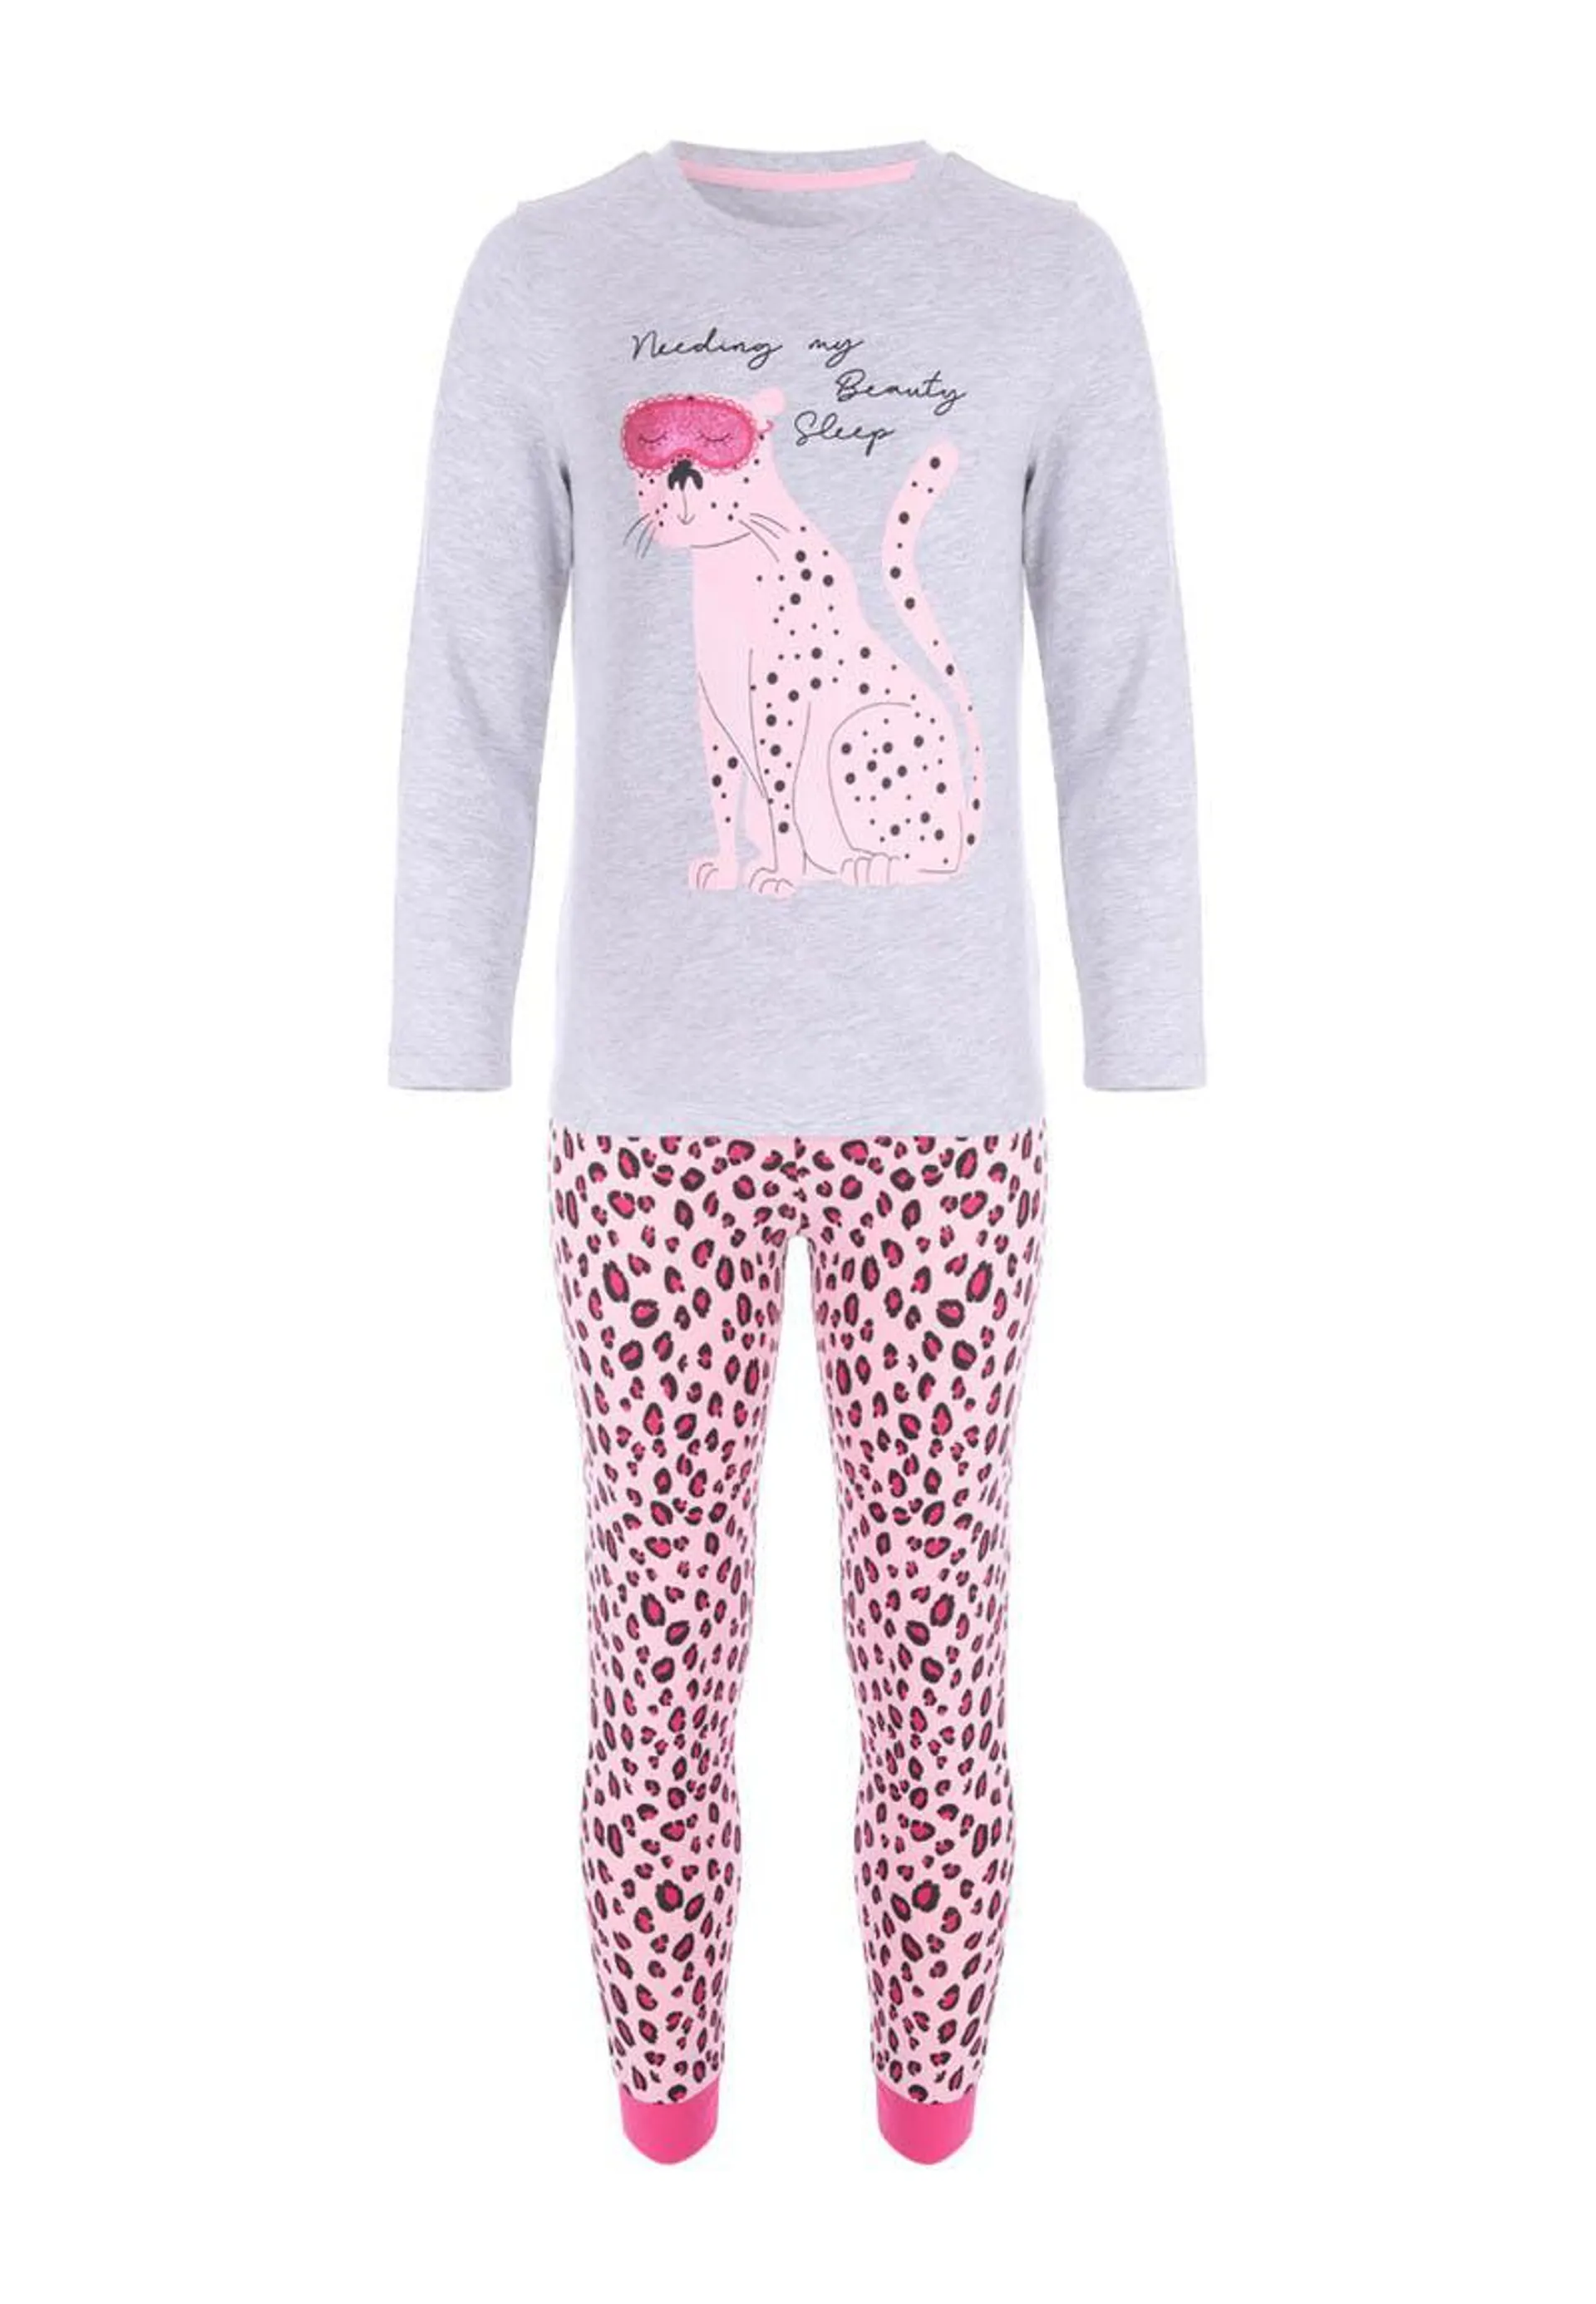 Older Girls Grey Leopard Print Pyjama Set